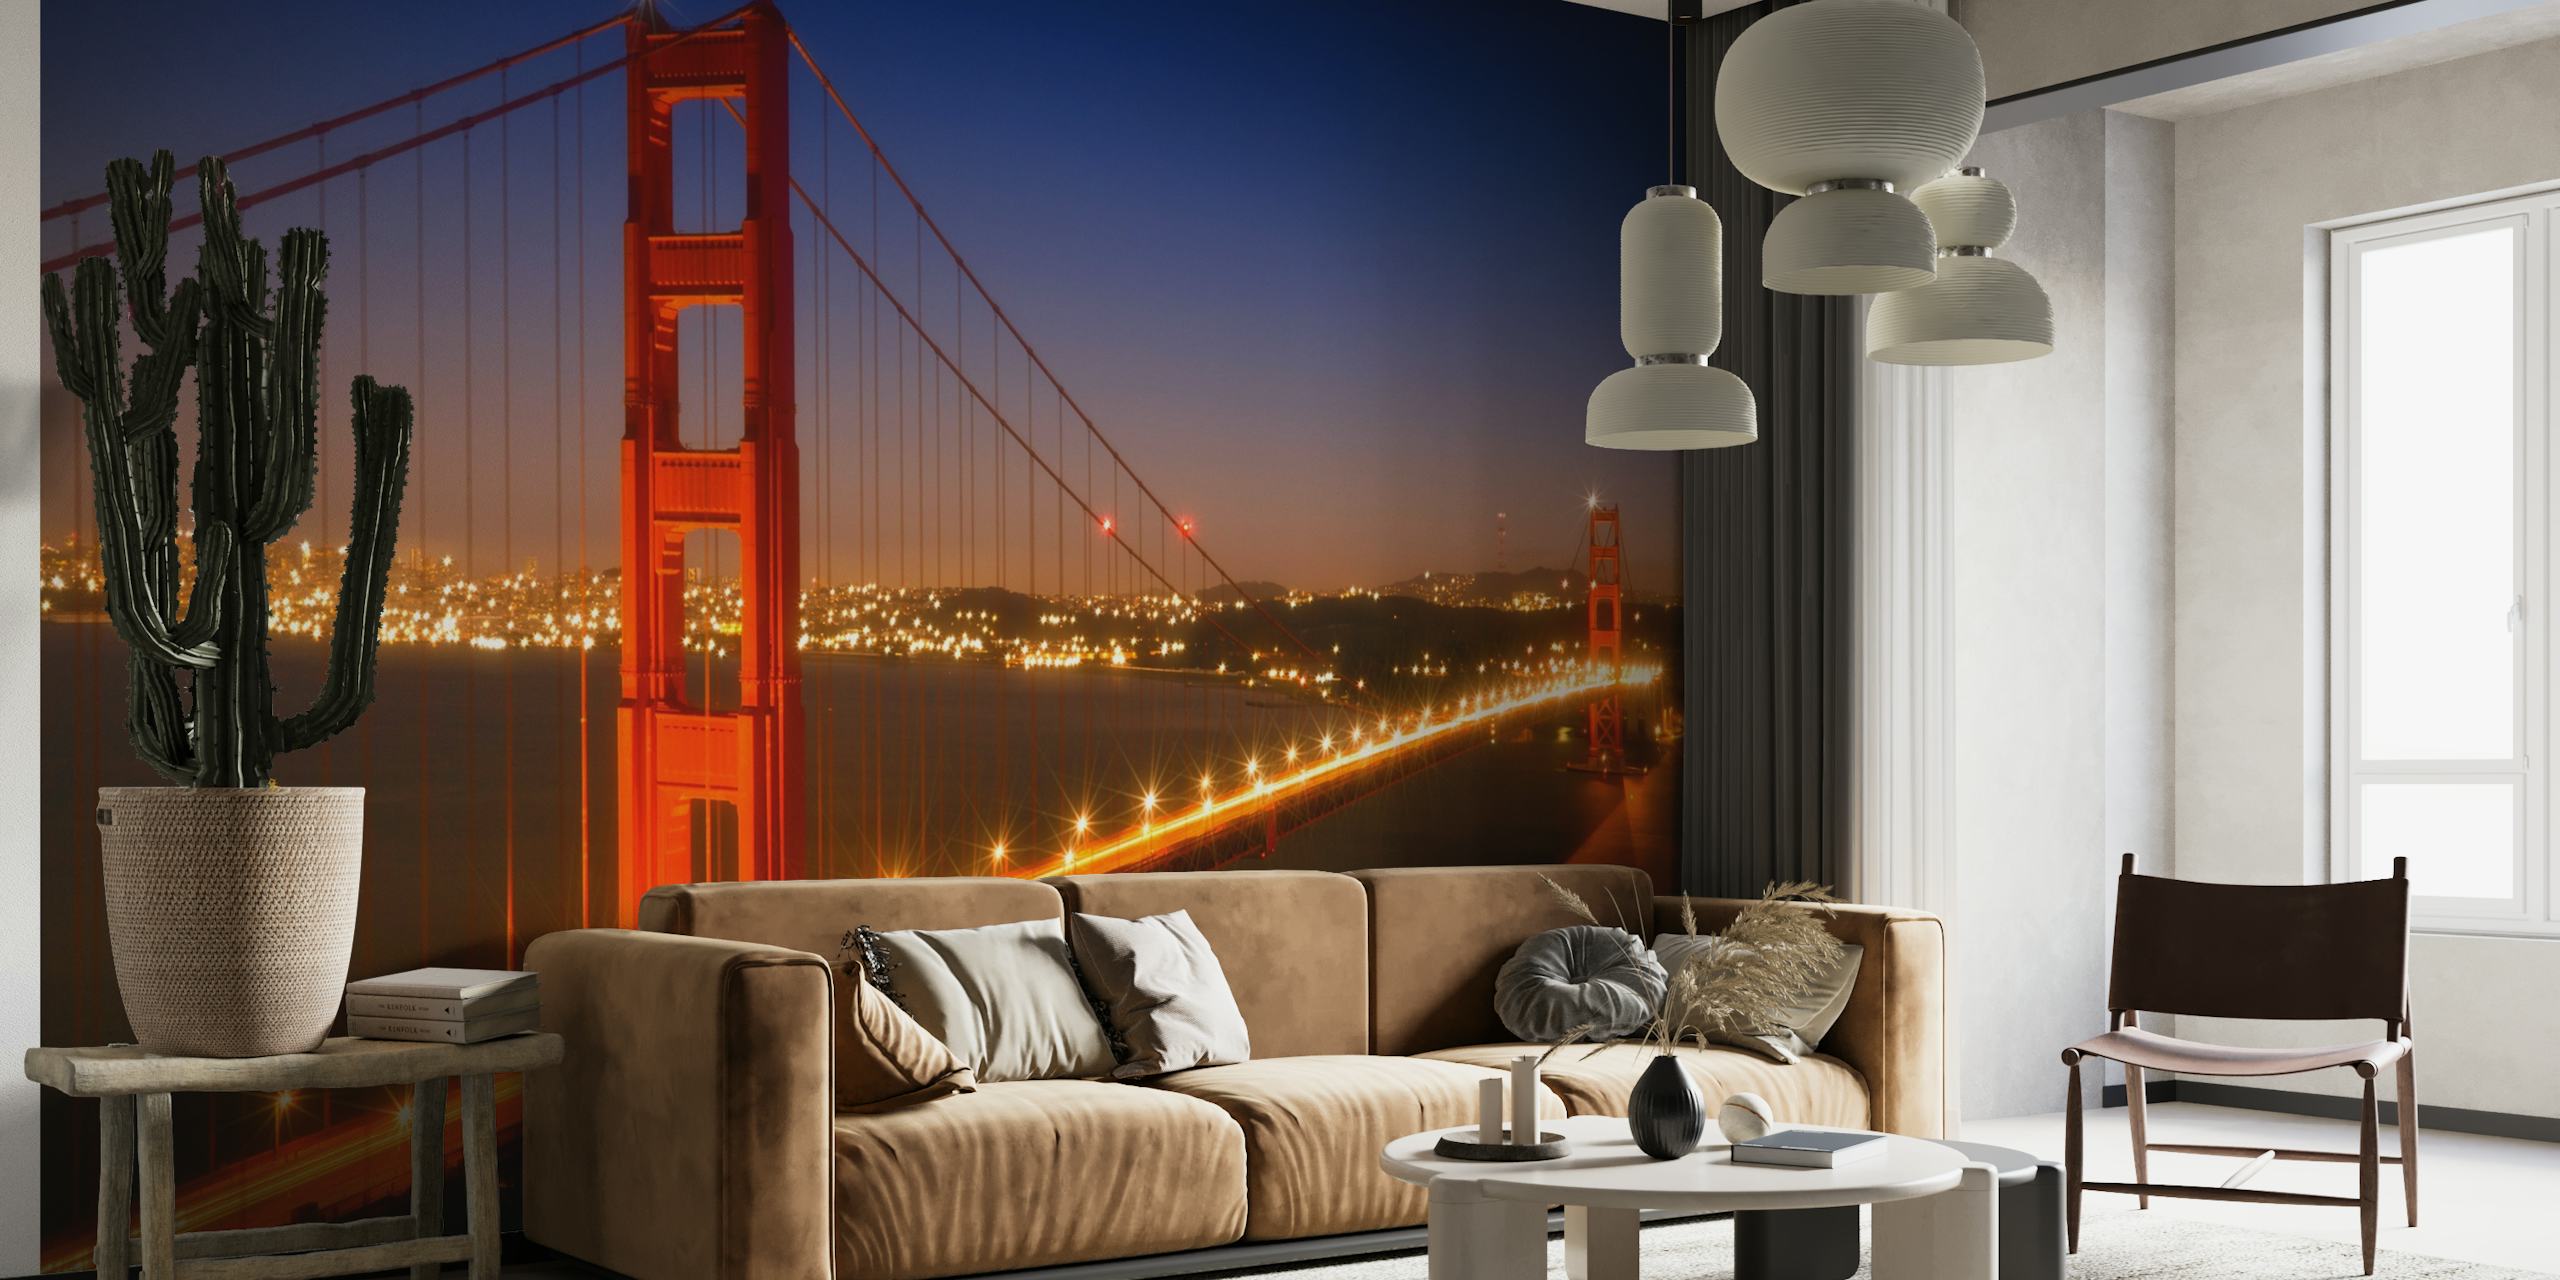 Golden Gate Bridge Impression papel pintado